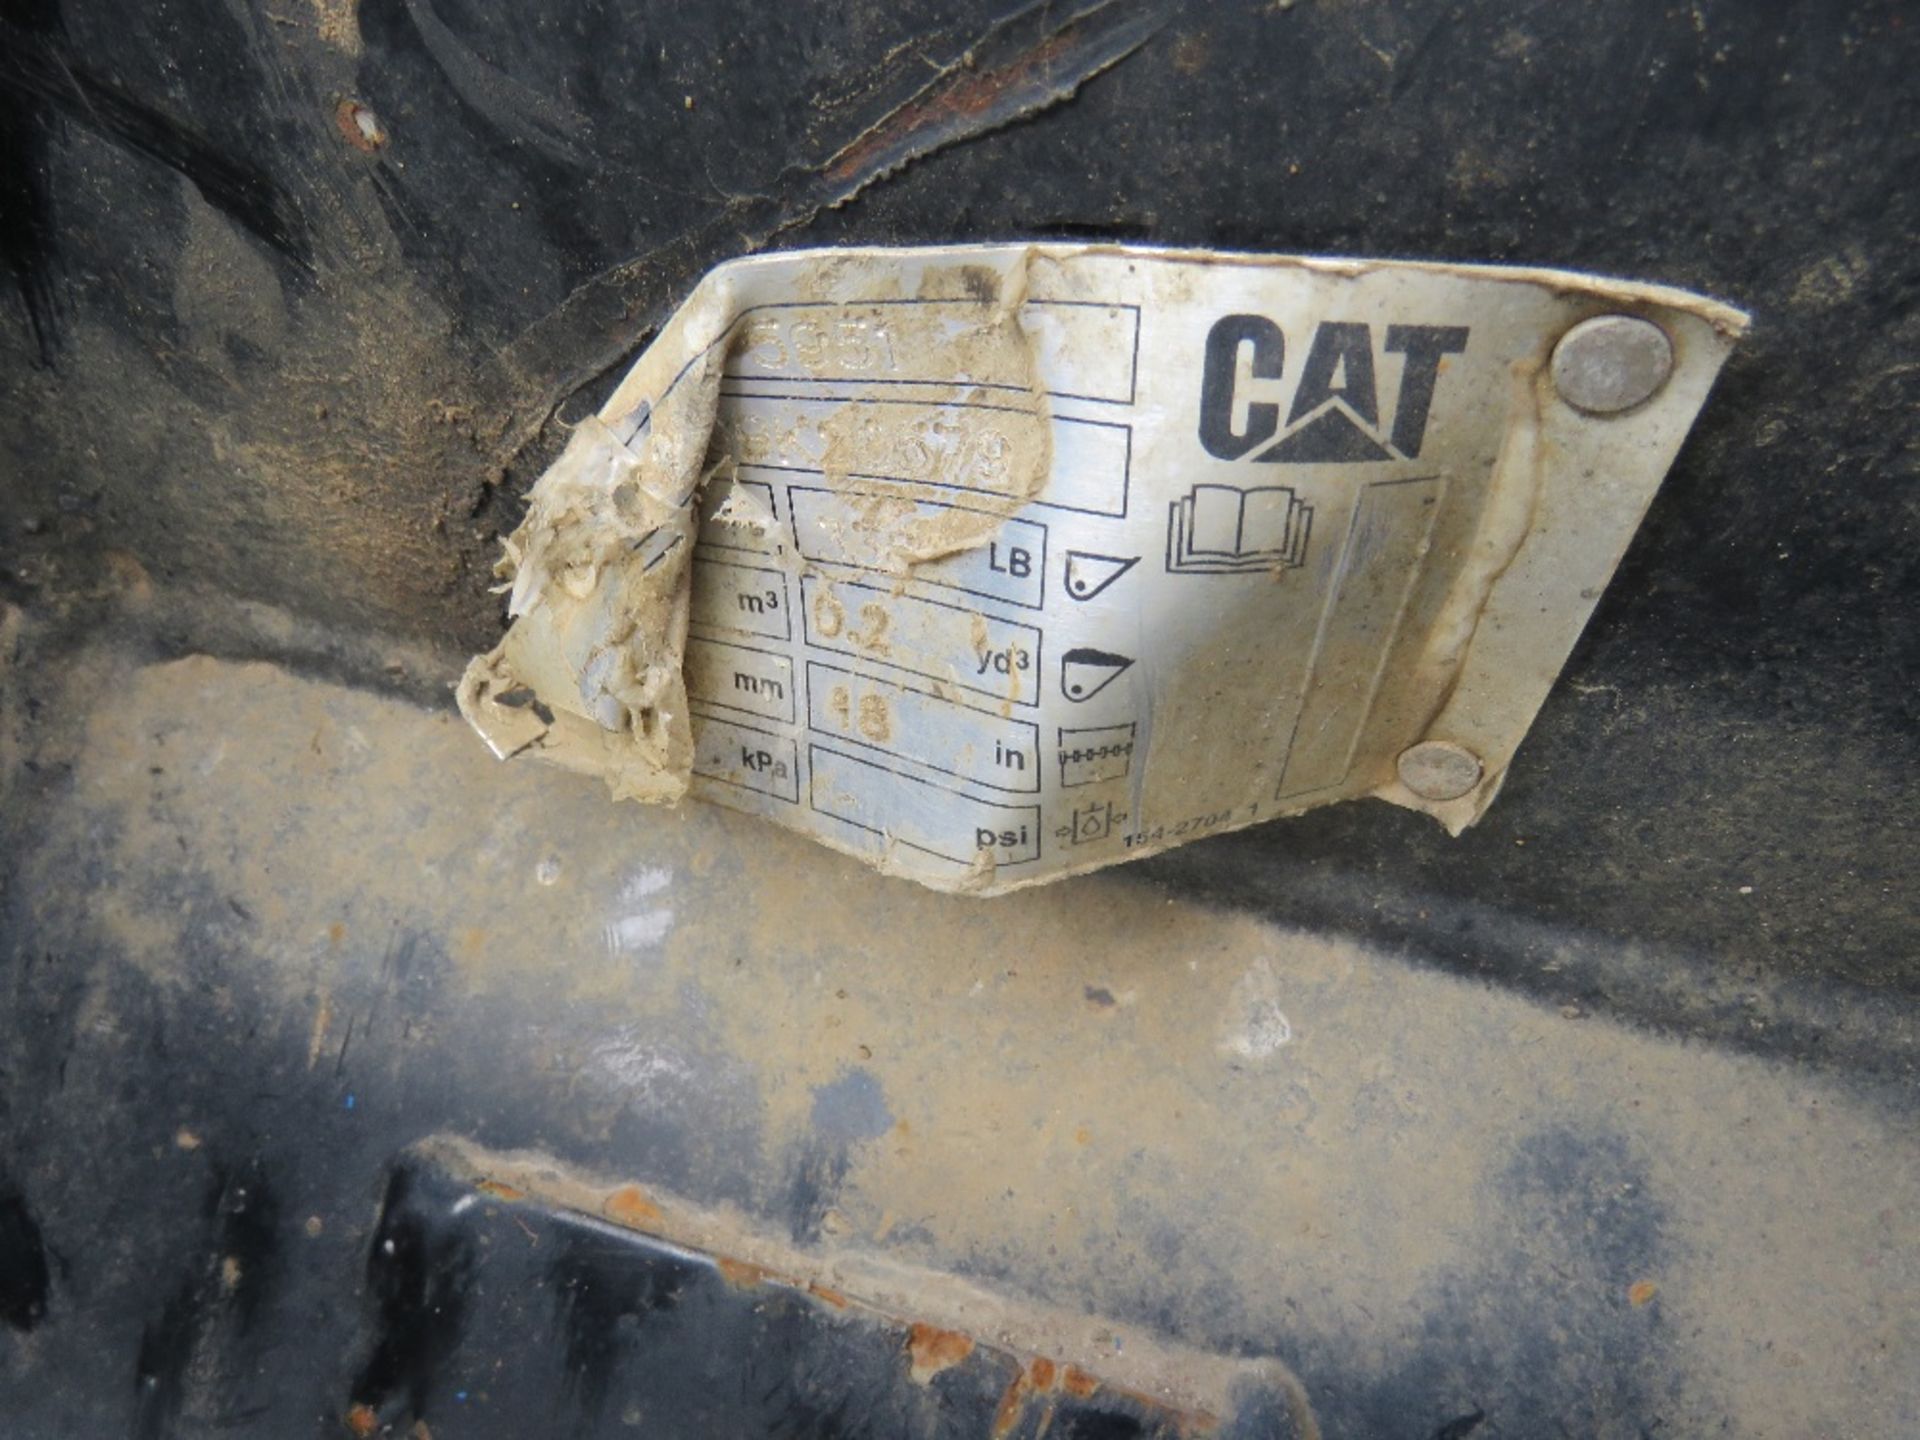 1 X CAT EXCAVATOR BUCKET ON 50MM PINS. 18" WIDTH. - Image 4 of 5